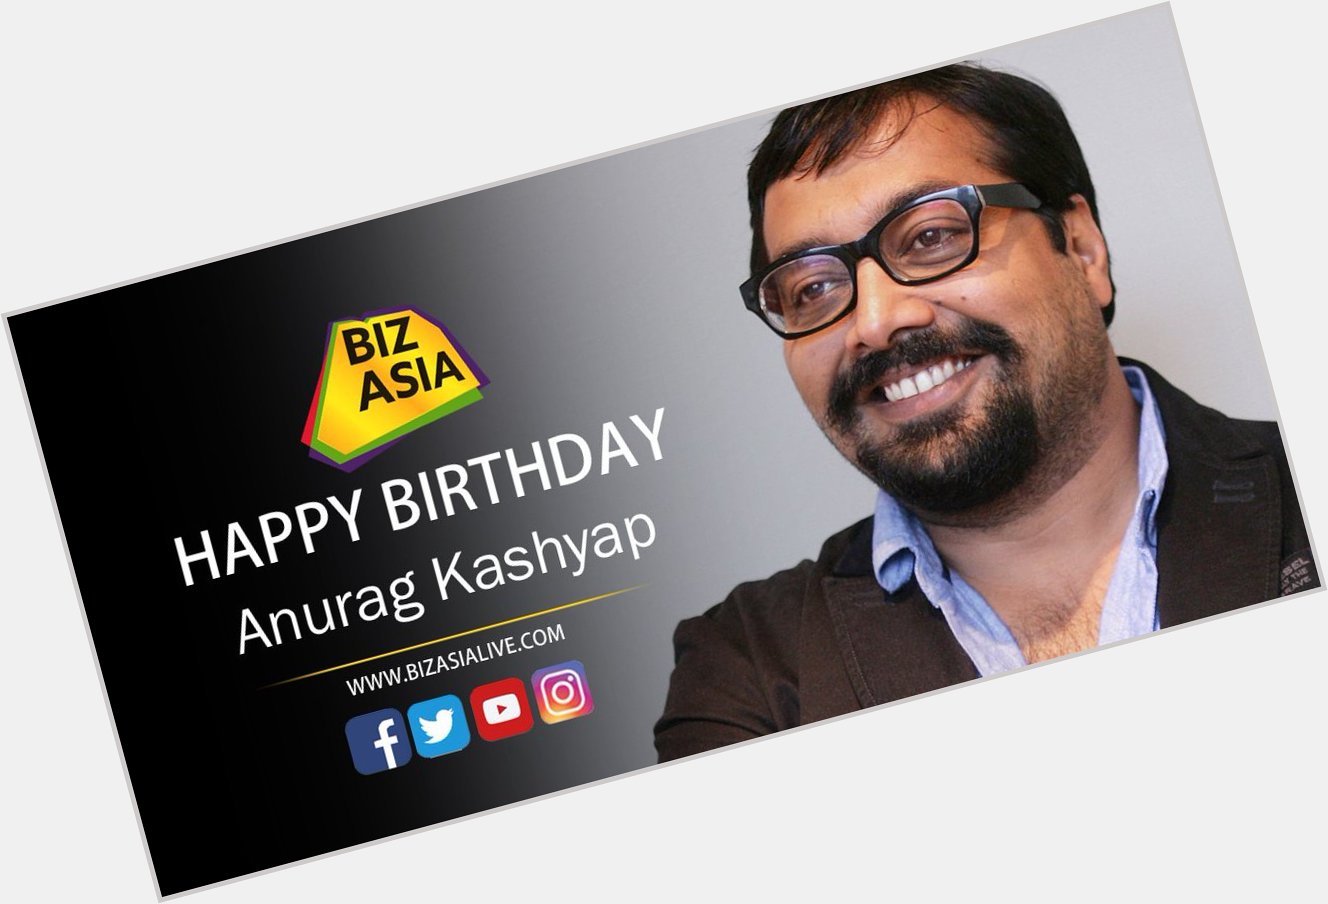  wishes Anurag Kashyap  a very happy birthday.  